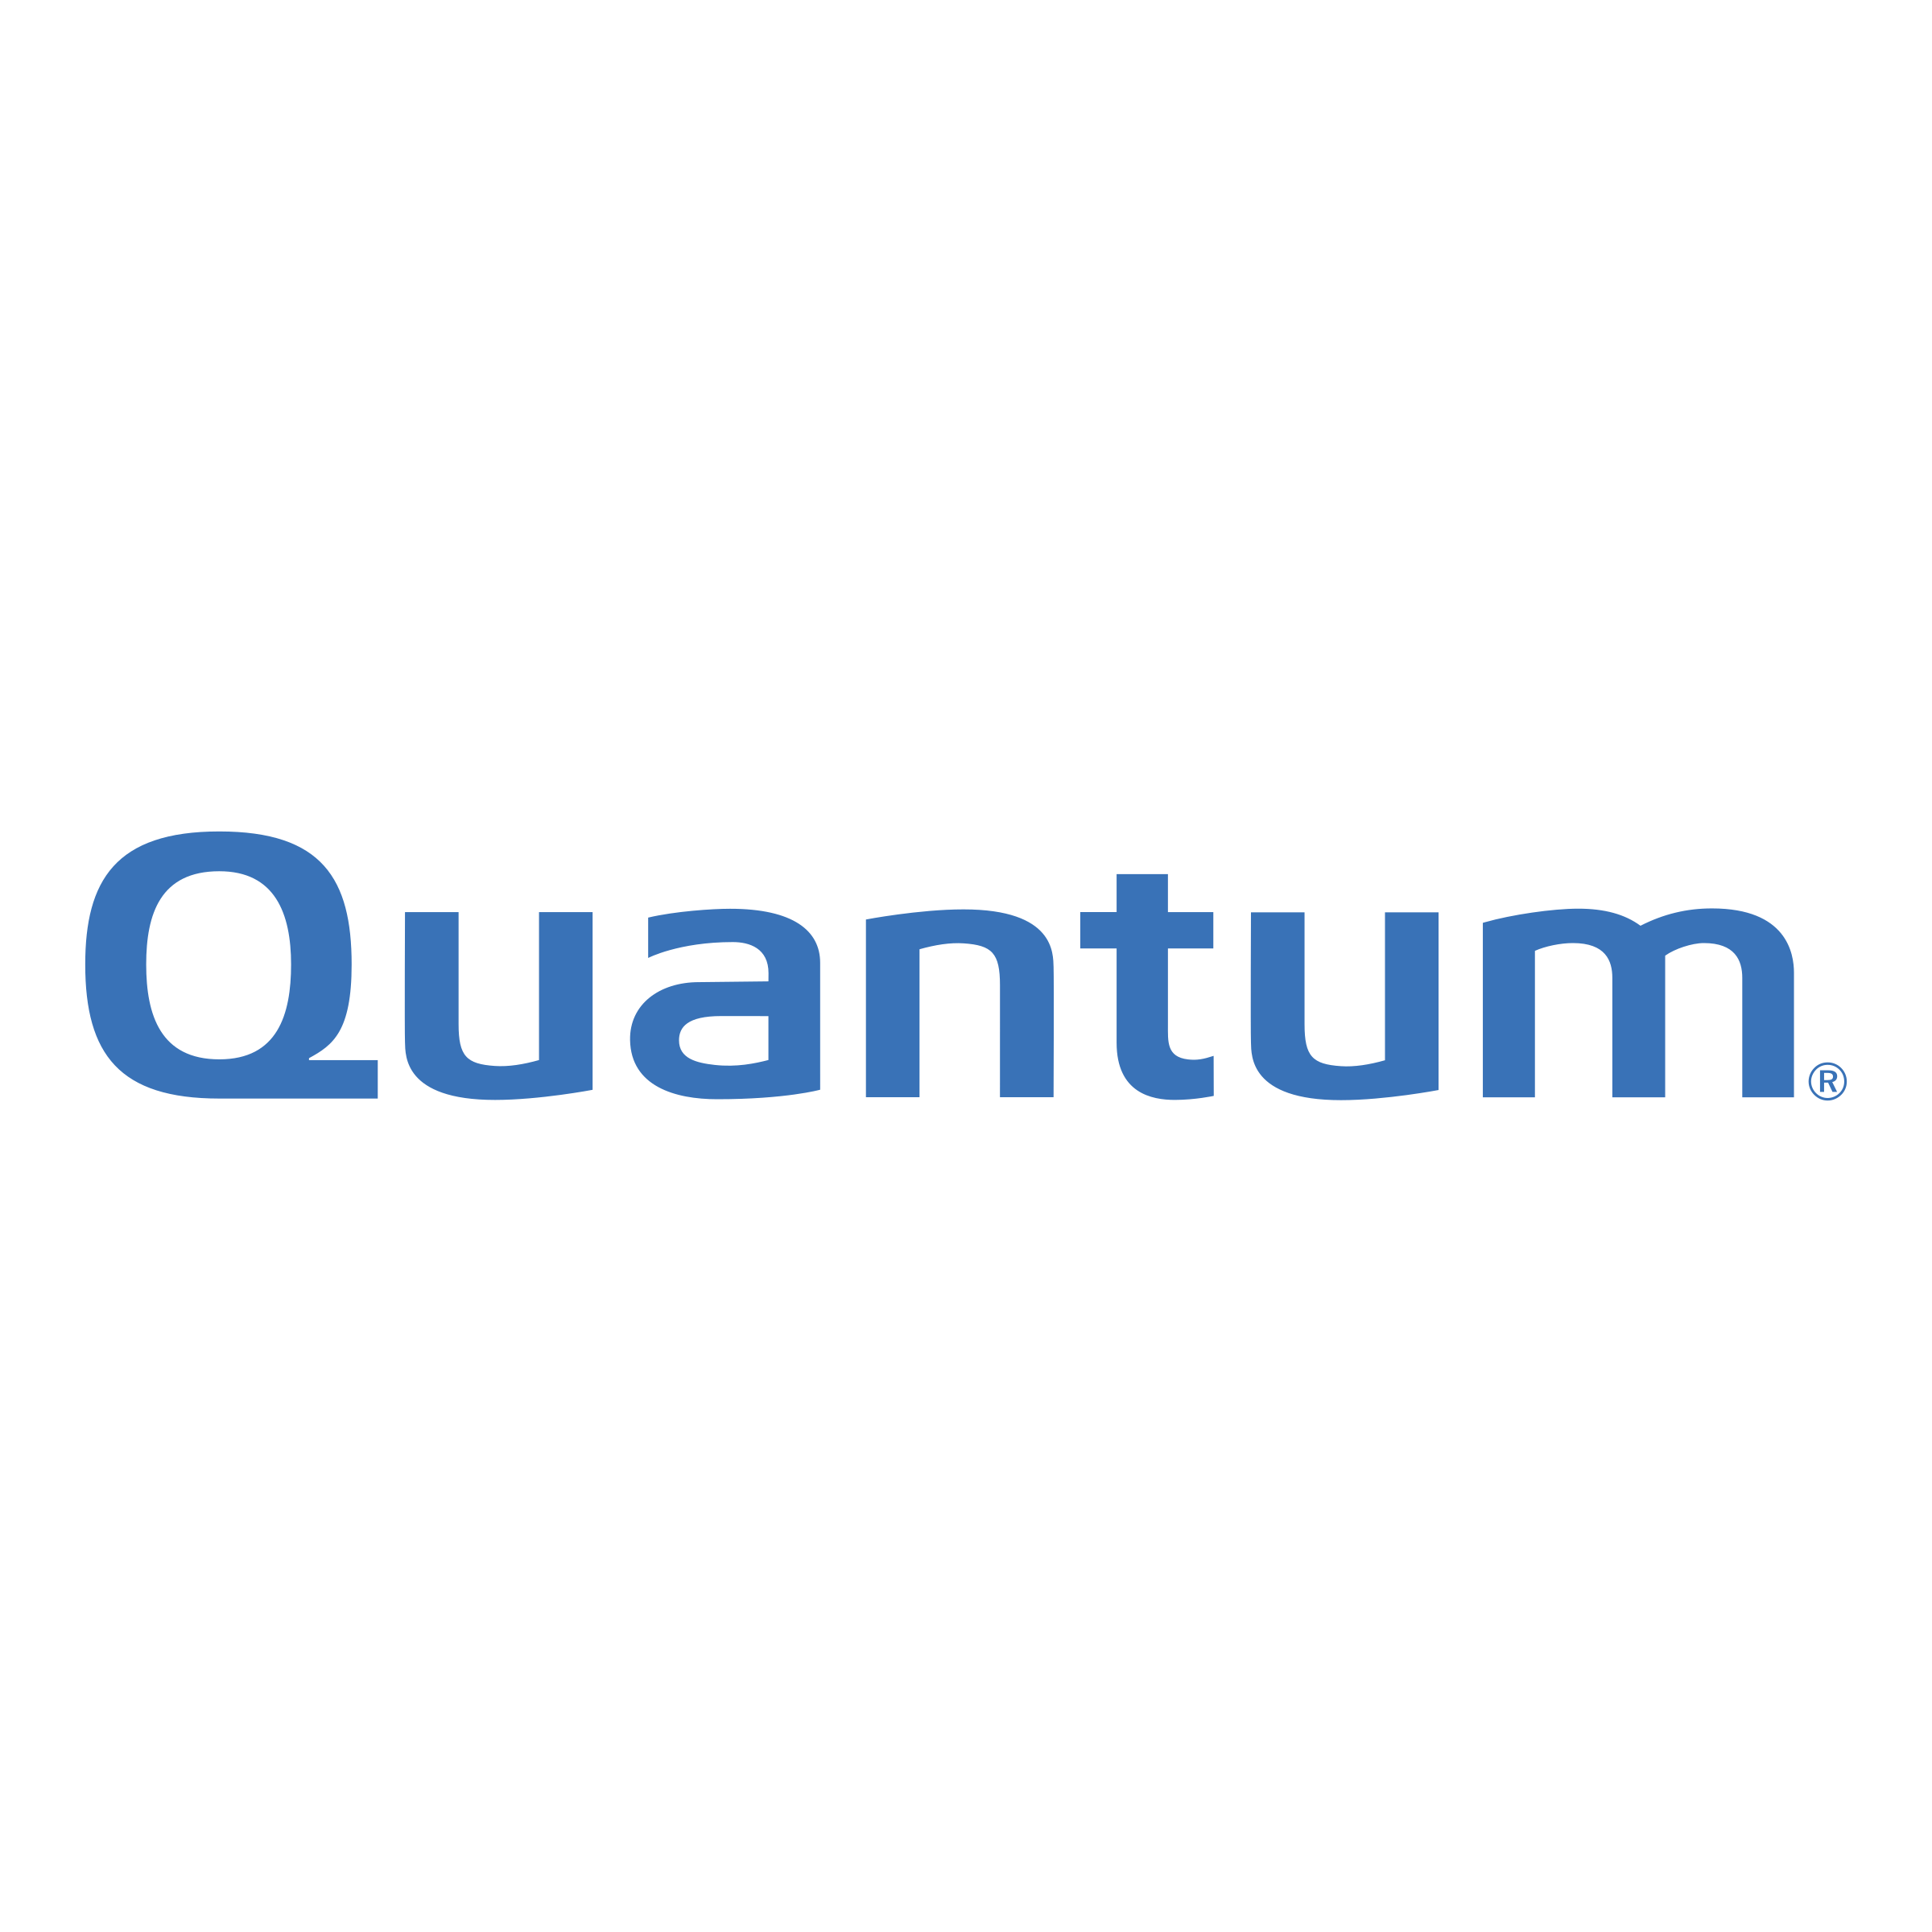 Quantum Logo - Quantum Logo PNG Transparent & SVG Vector - Freebie Supply